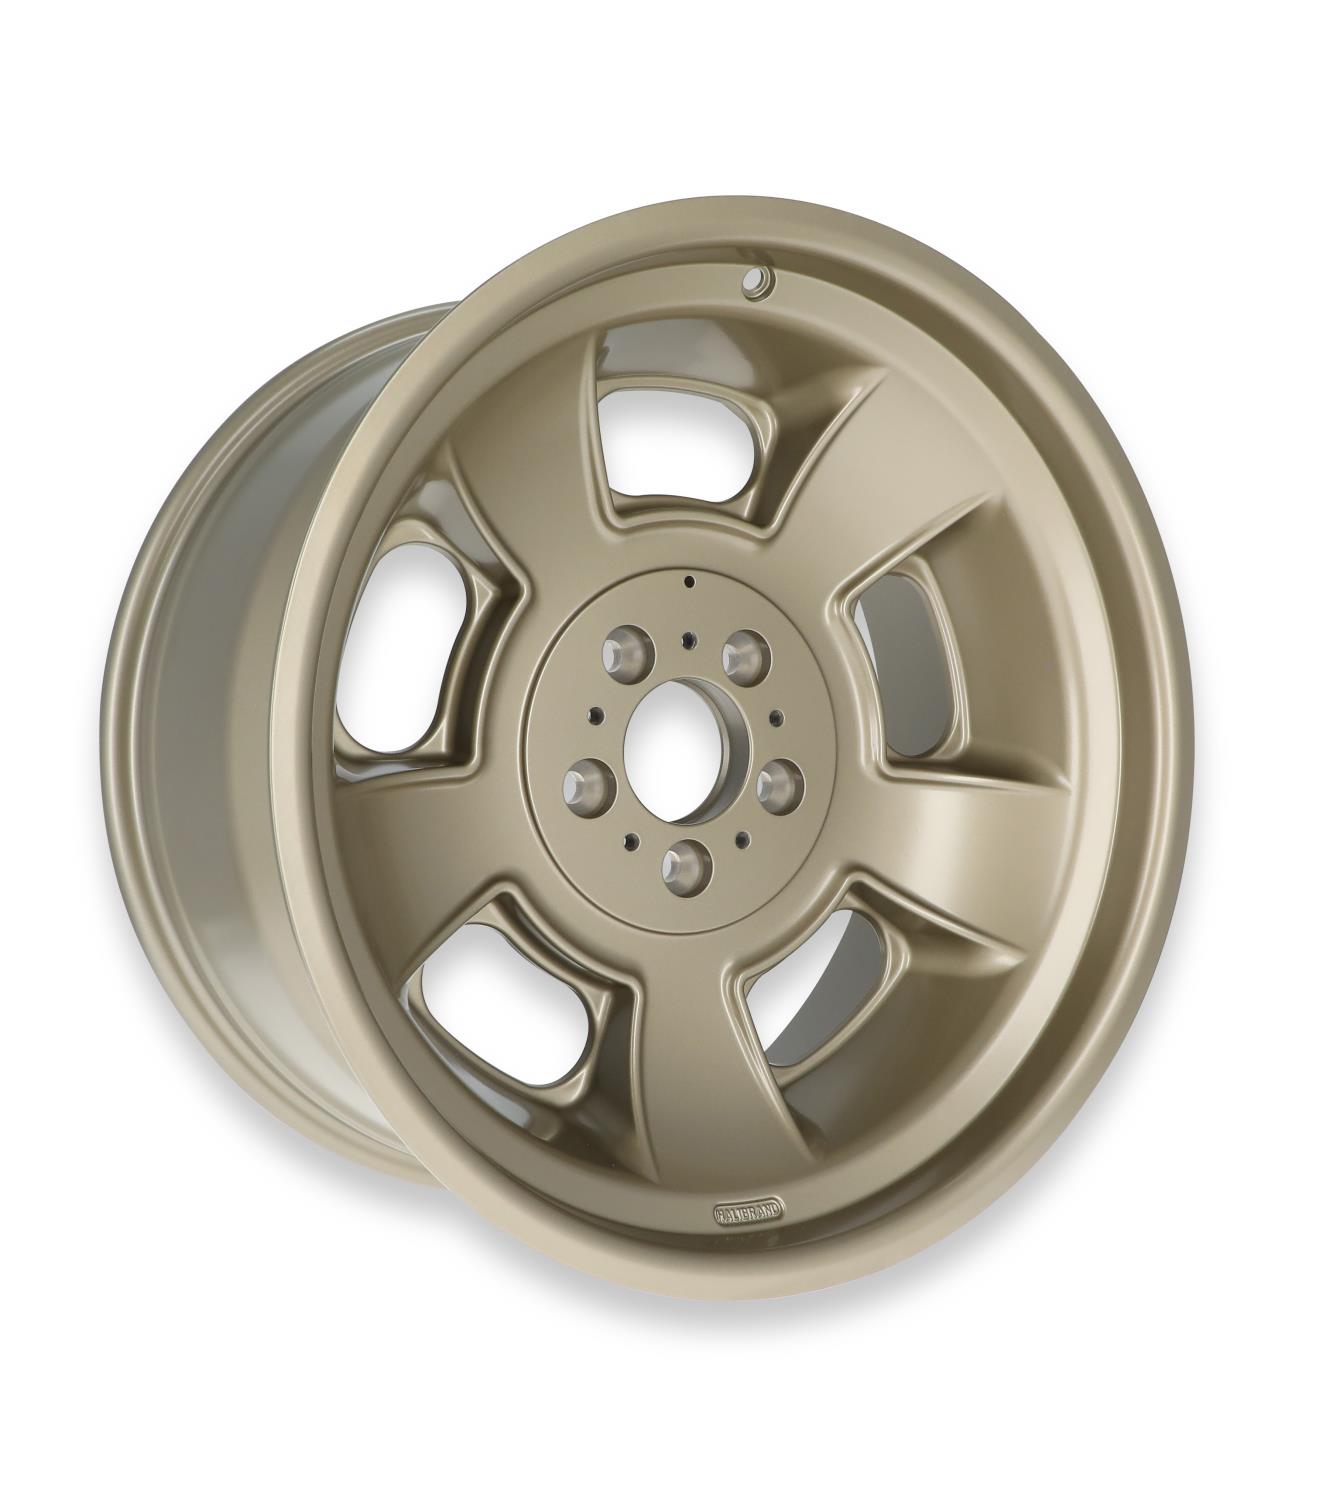 Sprint Rear Wheel, Size: 20x10", Bolt Pattern: 5x5", Backspace: 5.5" [MAG7 - Semi Gloss Clearcoat]